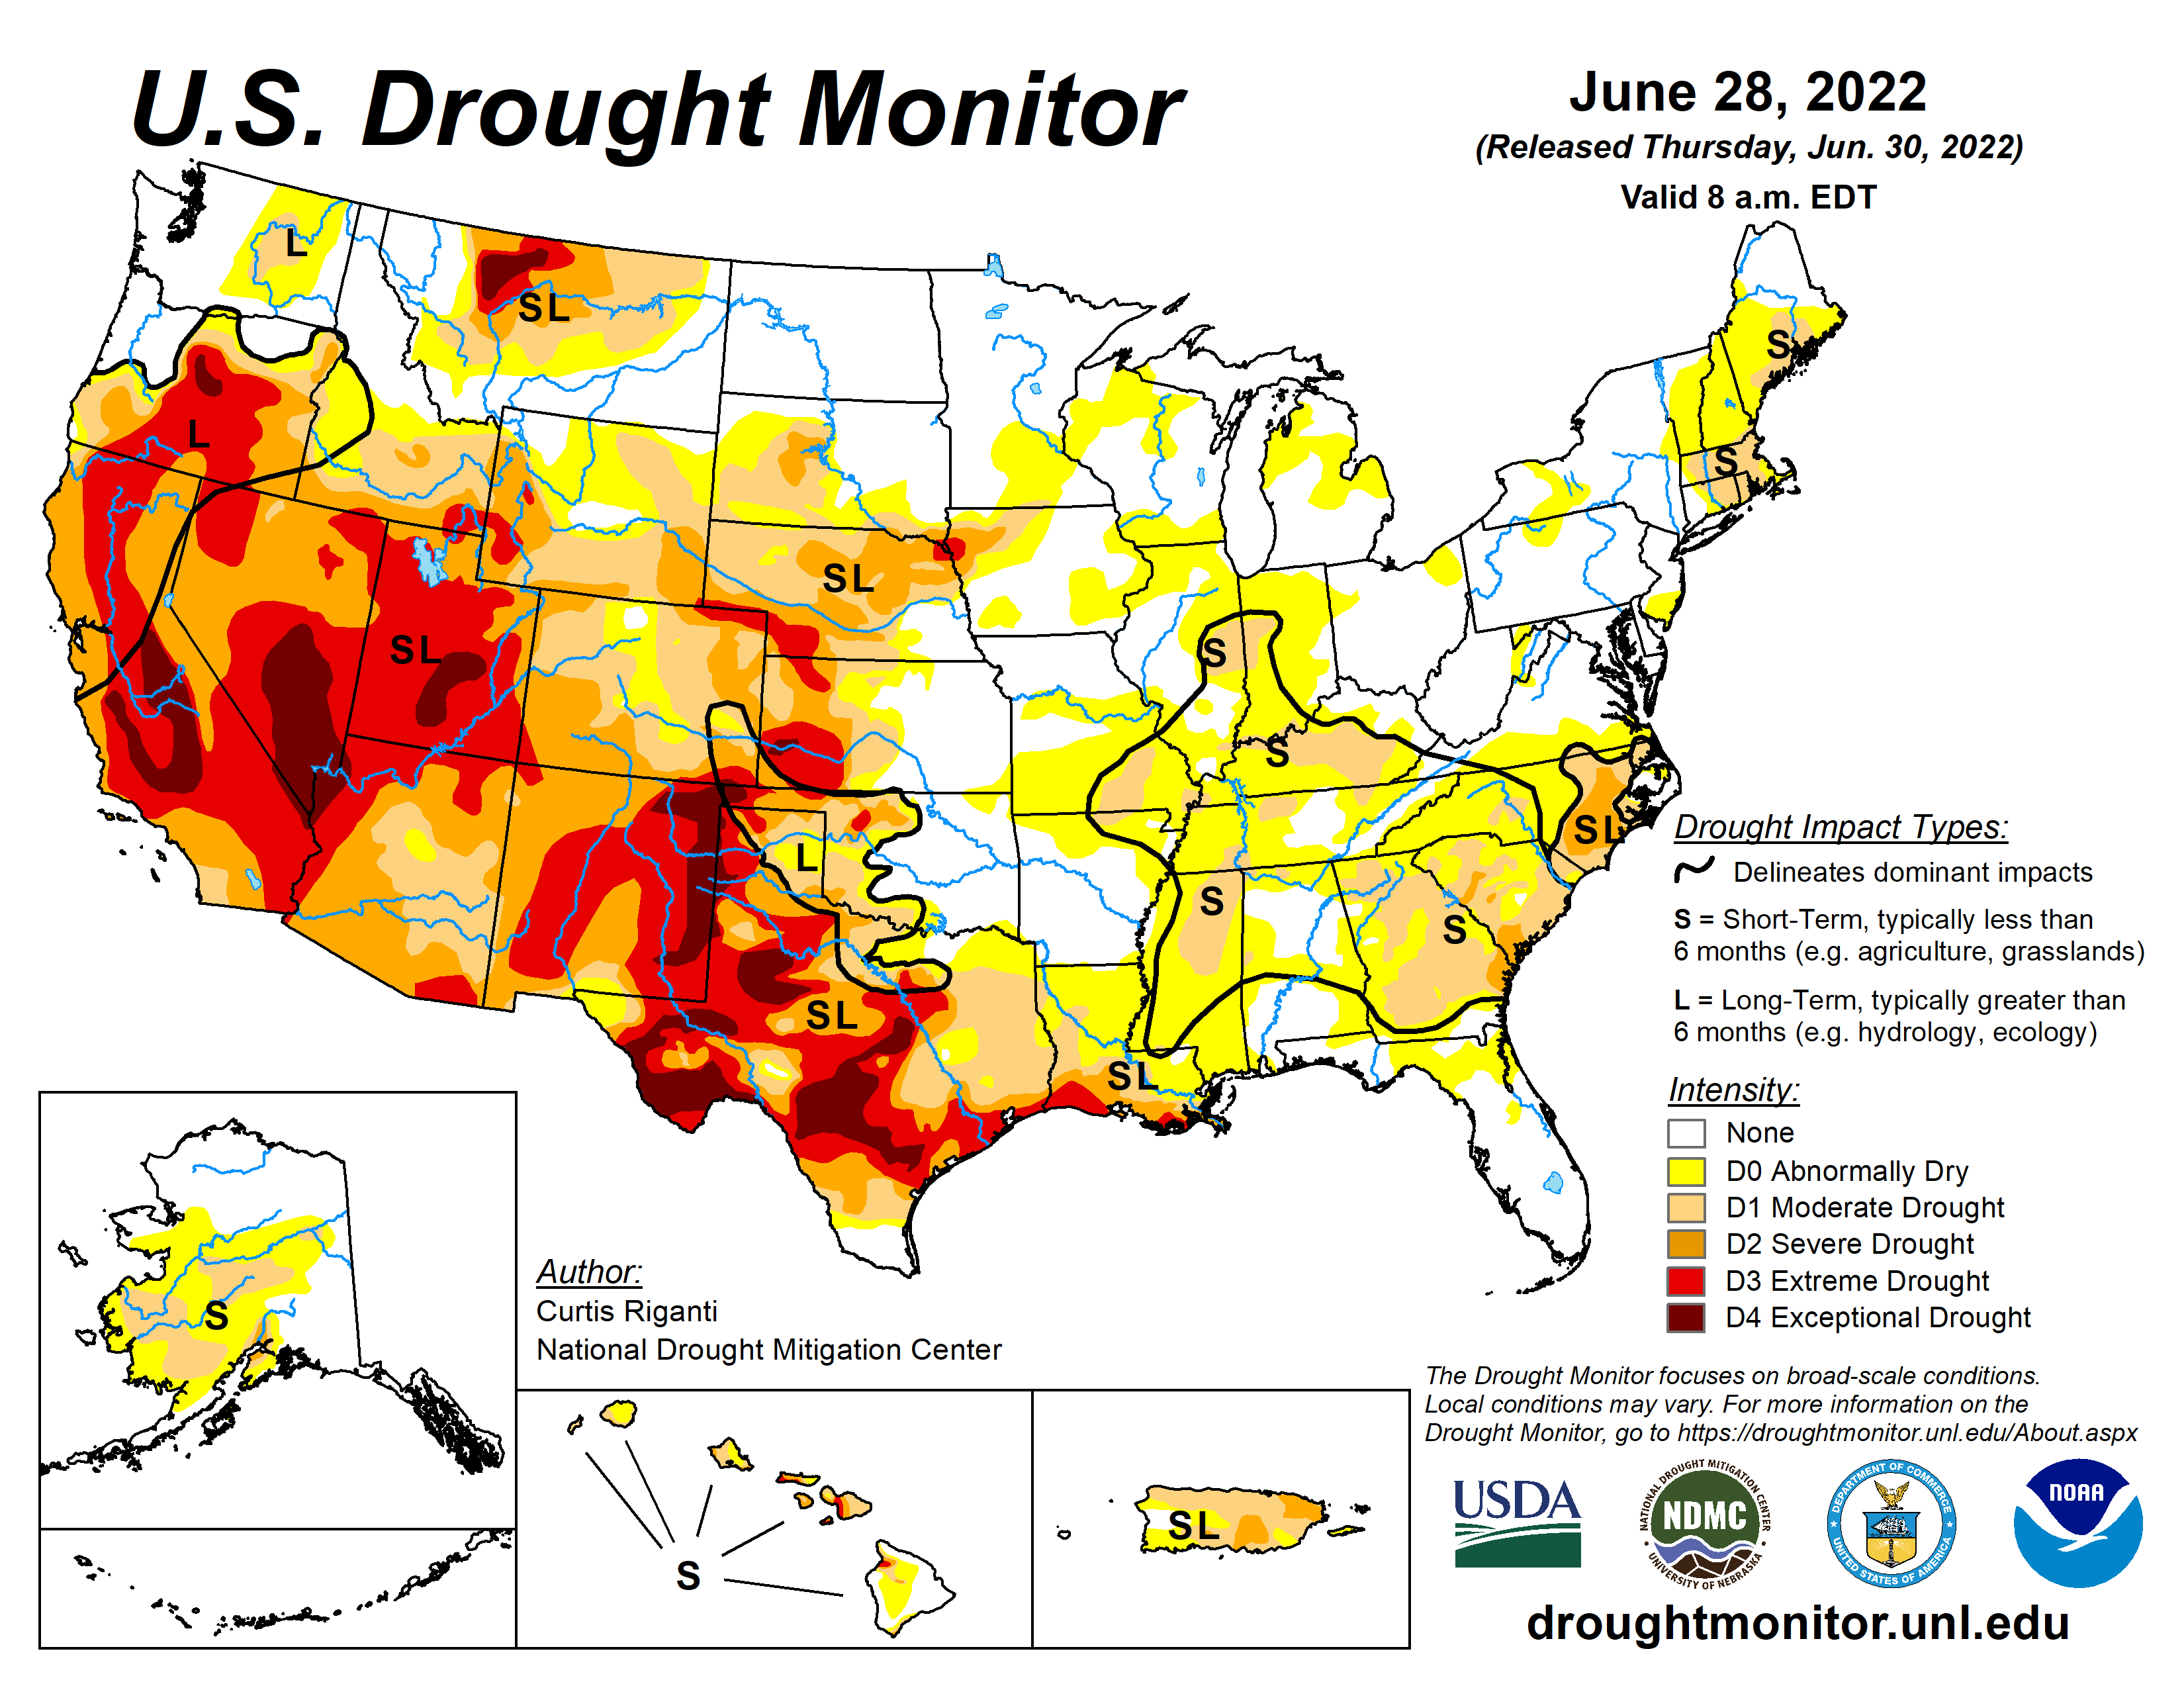 U.S. Drought Monitor, valid June 28, 2022